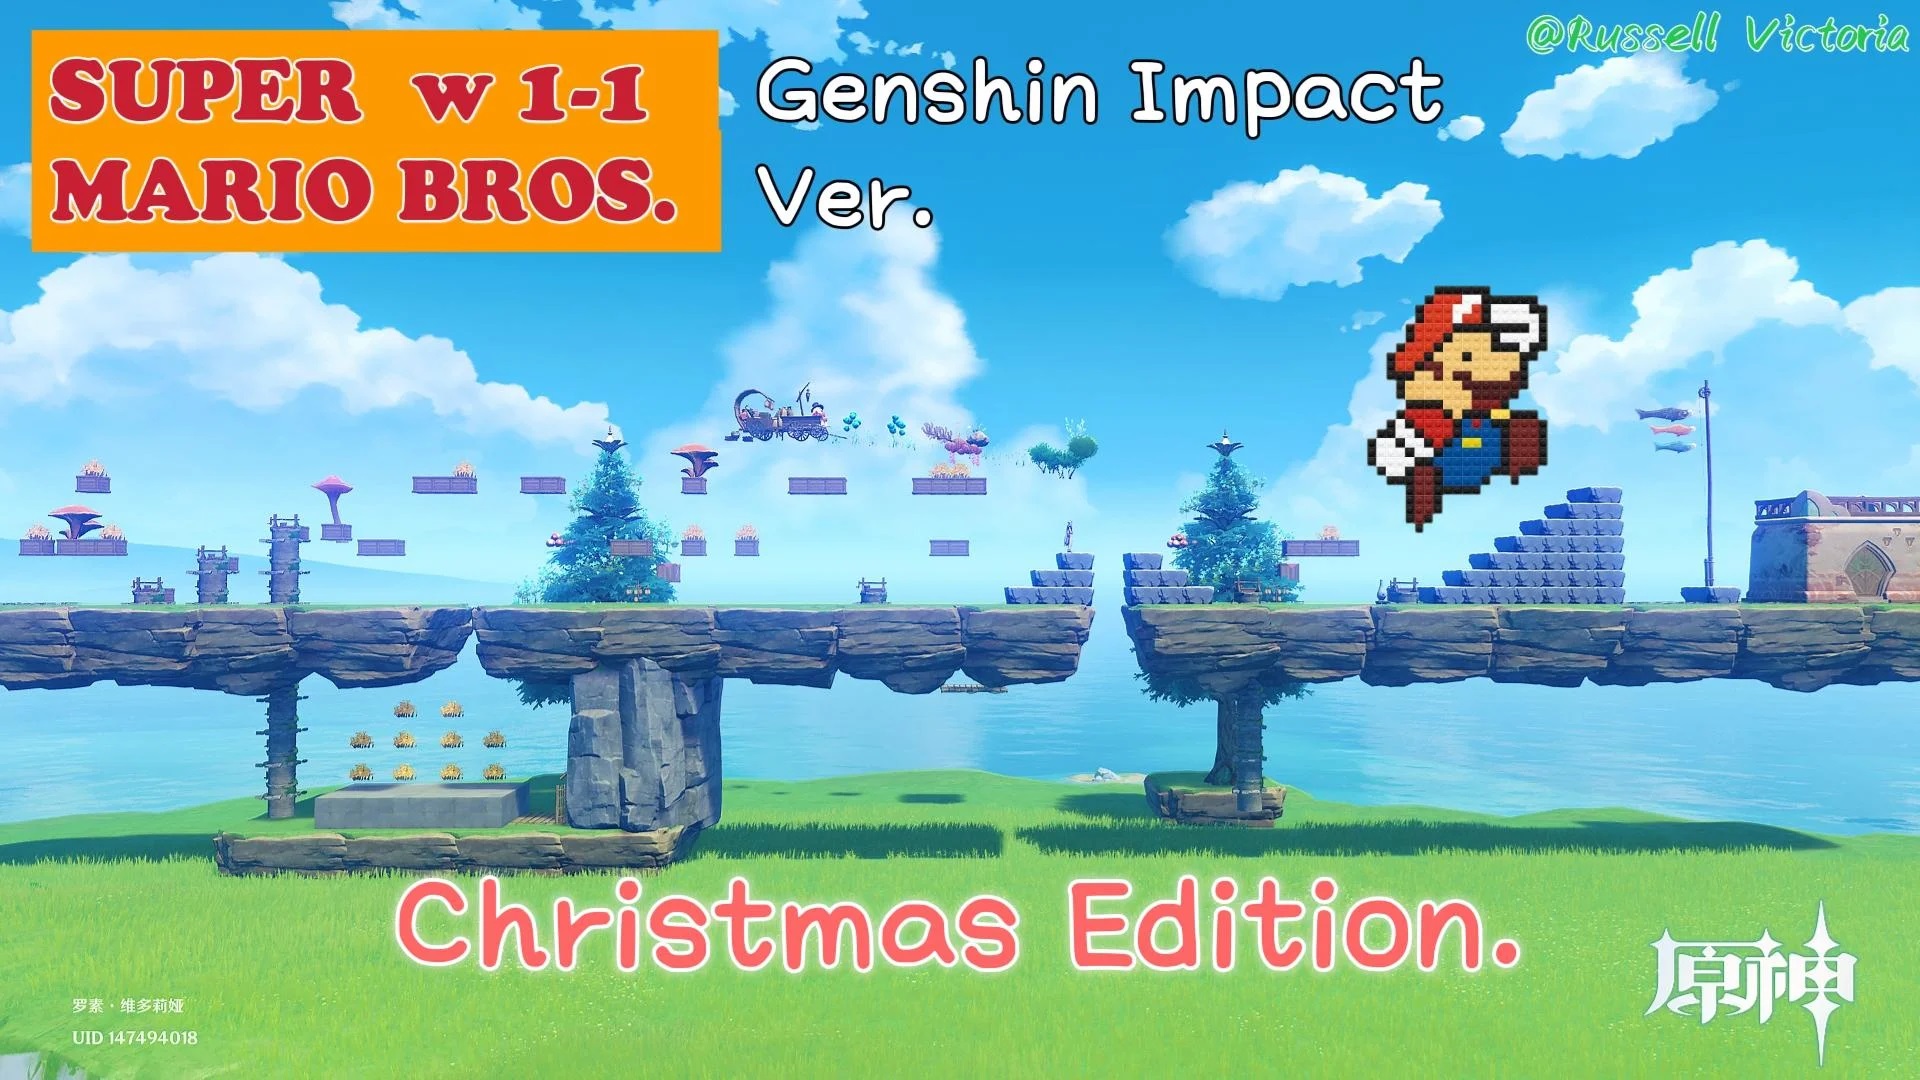 Players recreate Super Mario Bro in Genshin Impact